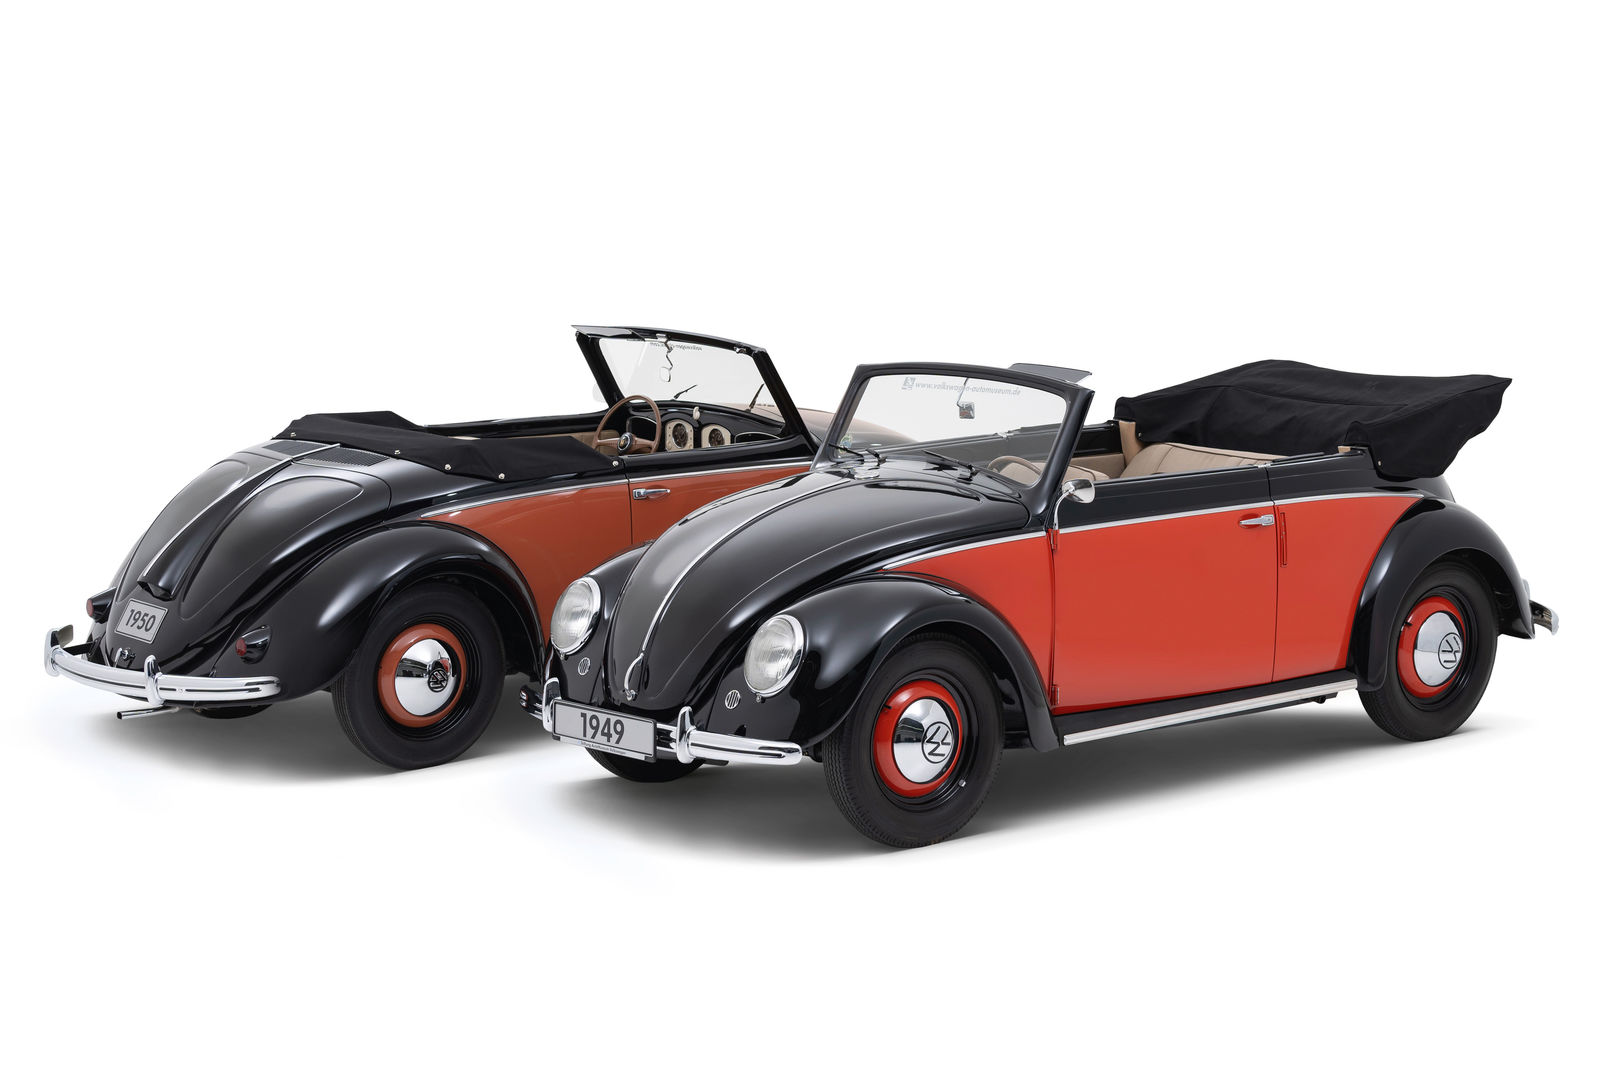 70 years of production of the Beetle Cabriolet: Volkswagen 1100 Hebmüller Cabriolet (left) and Volkswagen 1100 Karmann Cabriolet